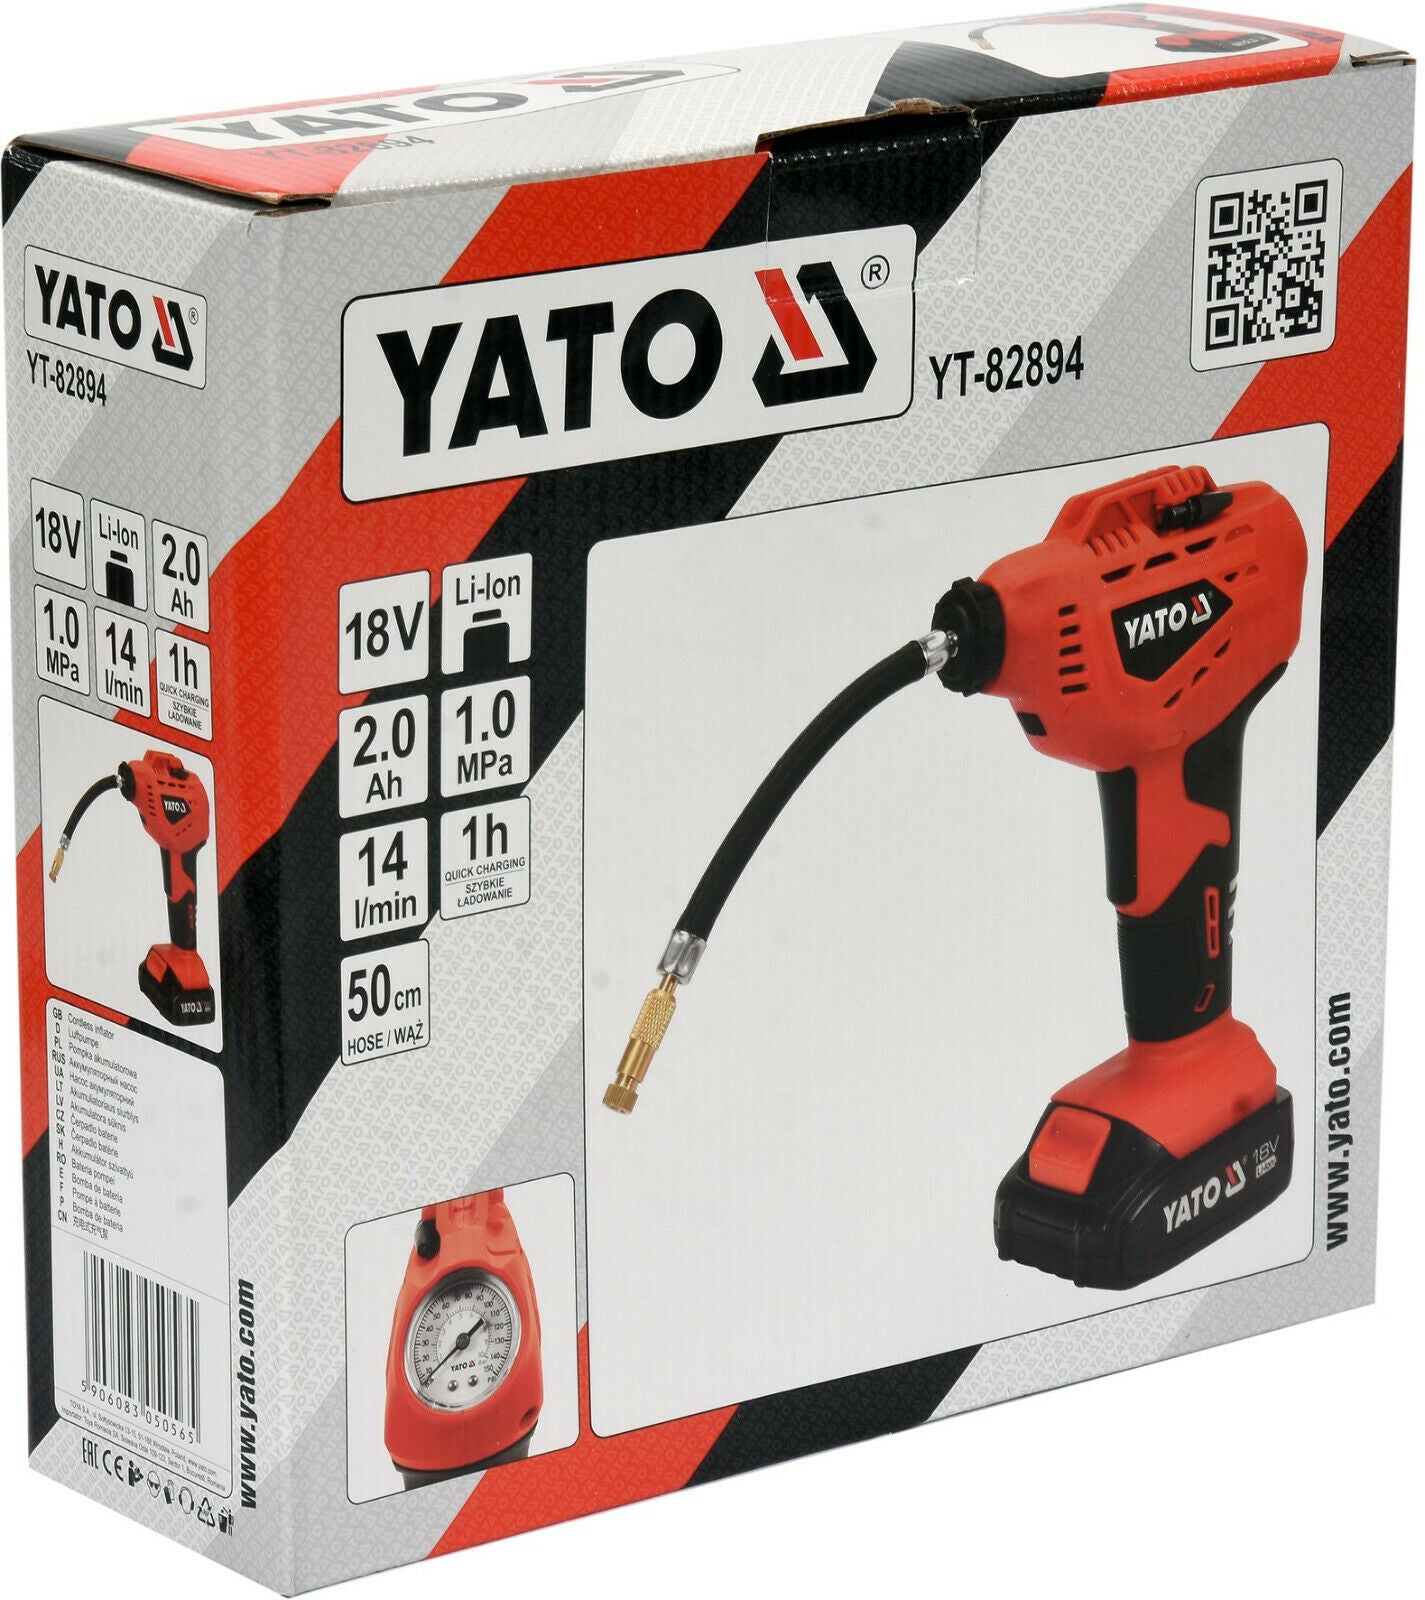 YATO  YT-82894 Akku Handkompressor Luftpumpe Reifen 18V 200mAh Kompressor